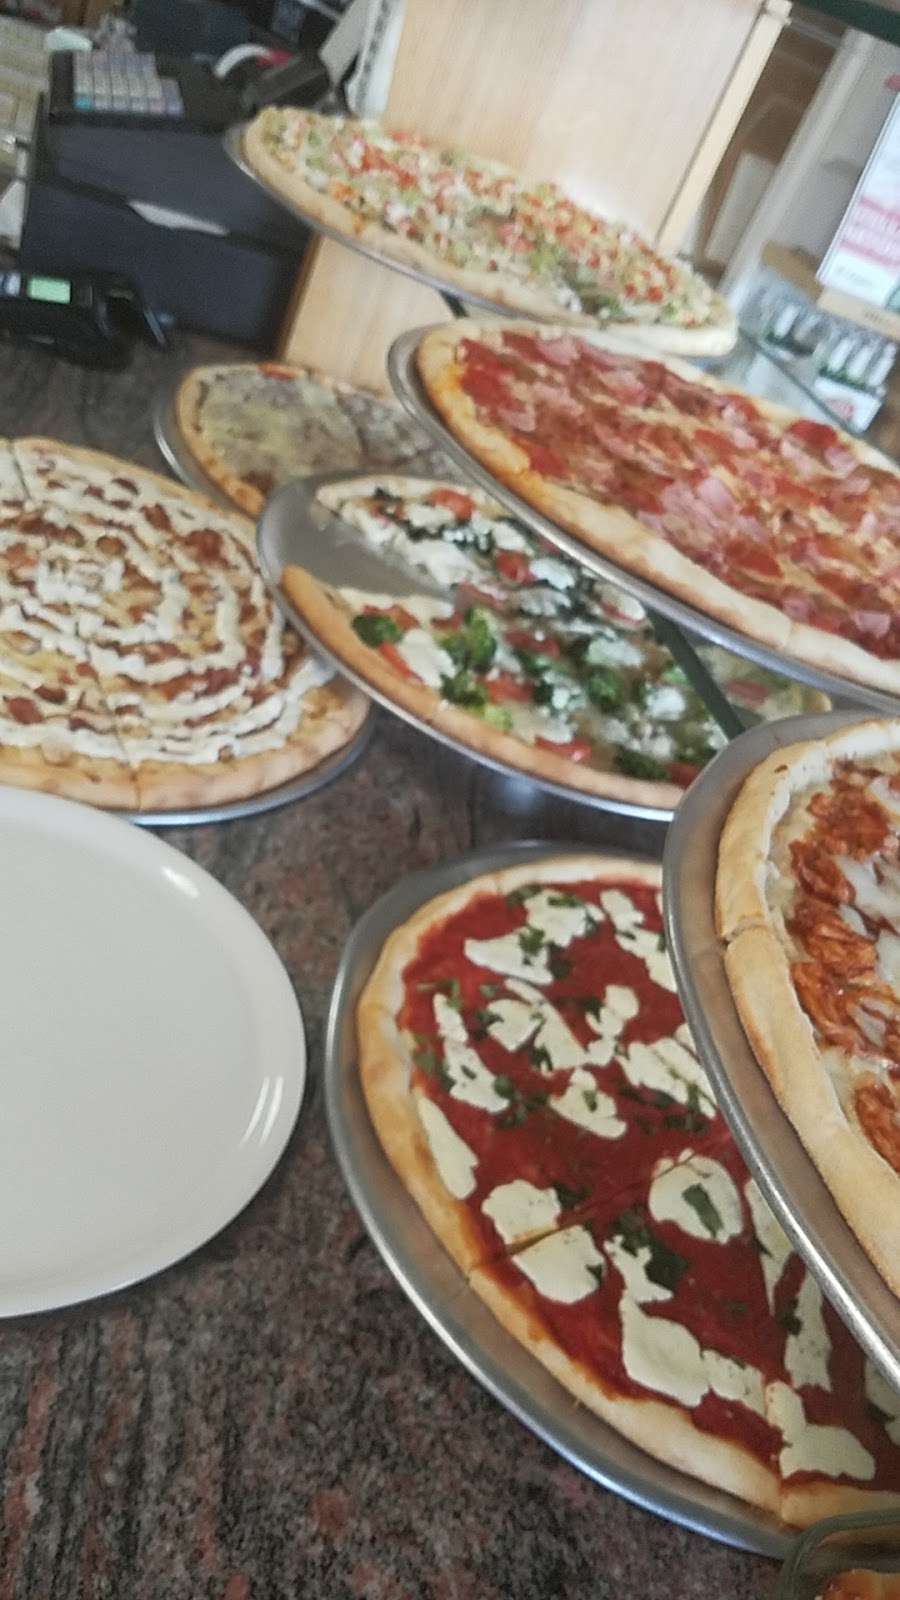 Capri Pizza Restaurant & Bar | 5855 Easton Rd, Plumsteadville, PA 18949, USA | Phone: (215) 766-8440